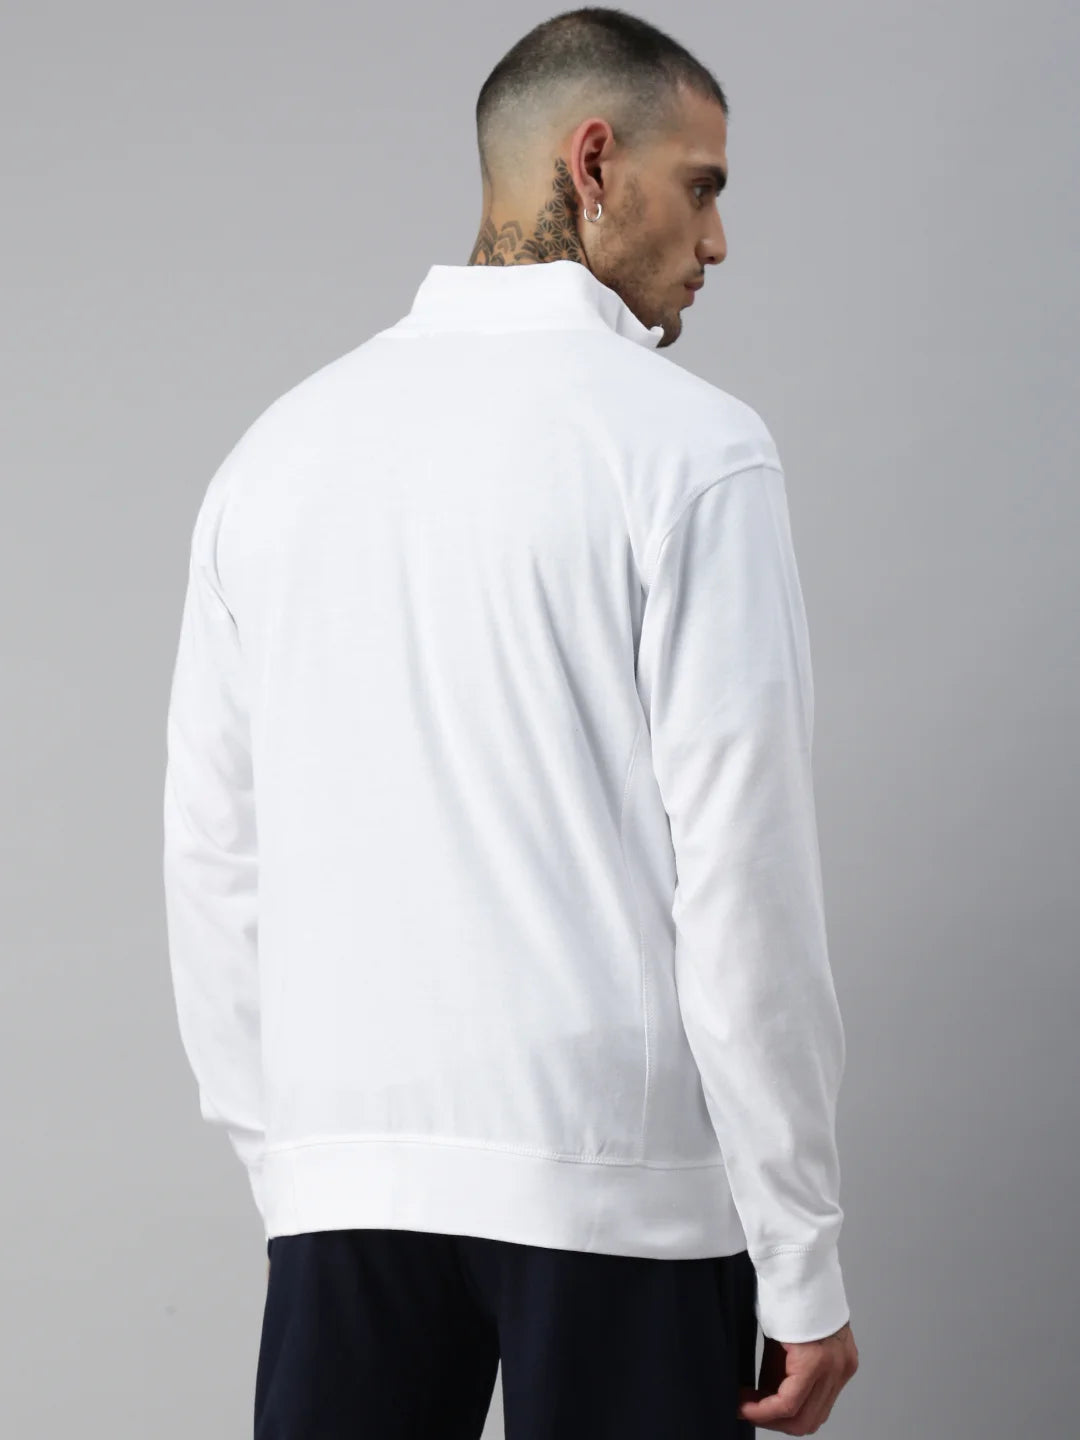 unisexe-dallas-coton-polyester-veste-blanc-avant